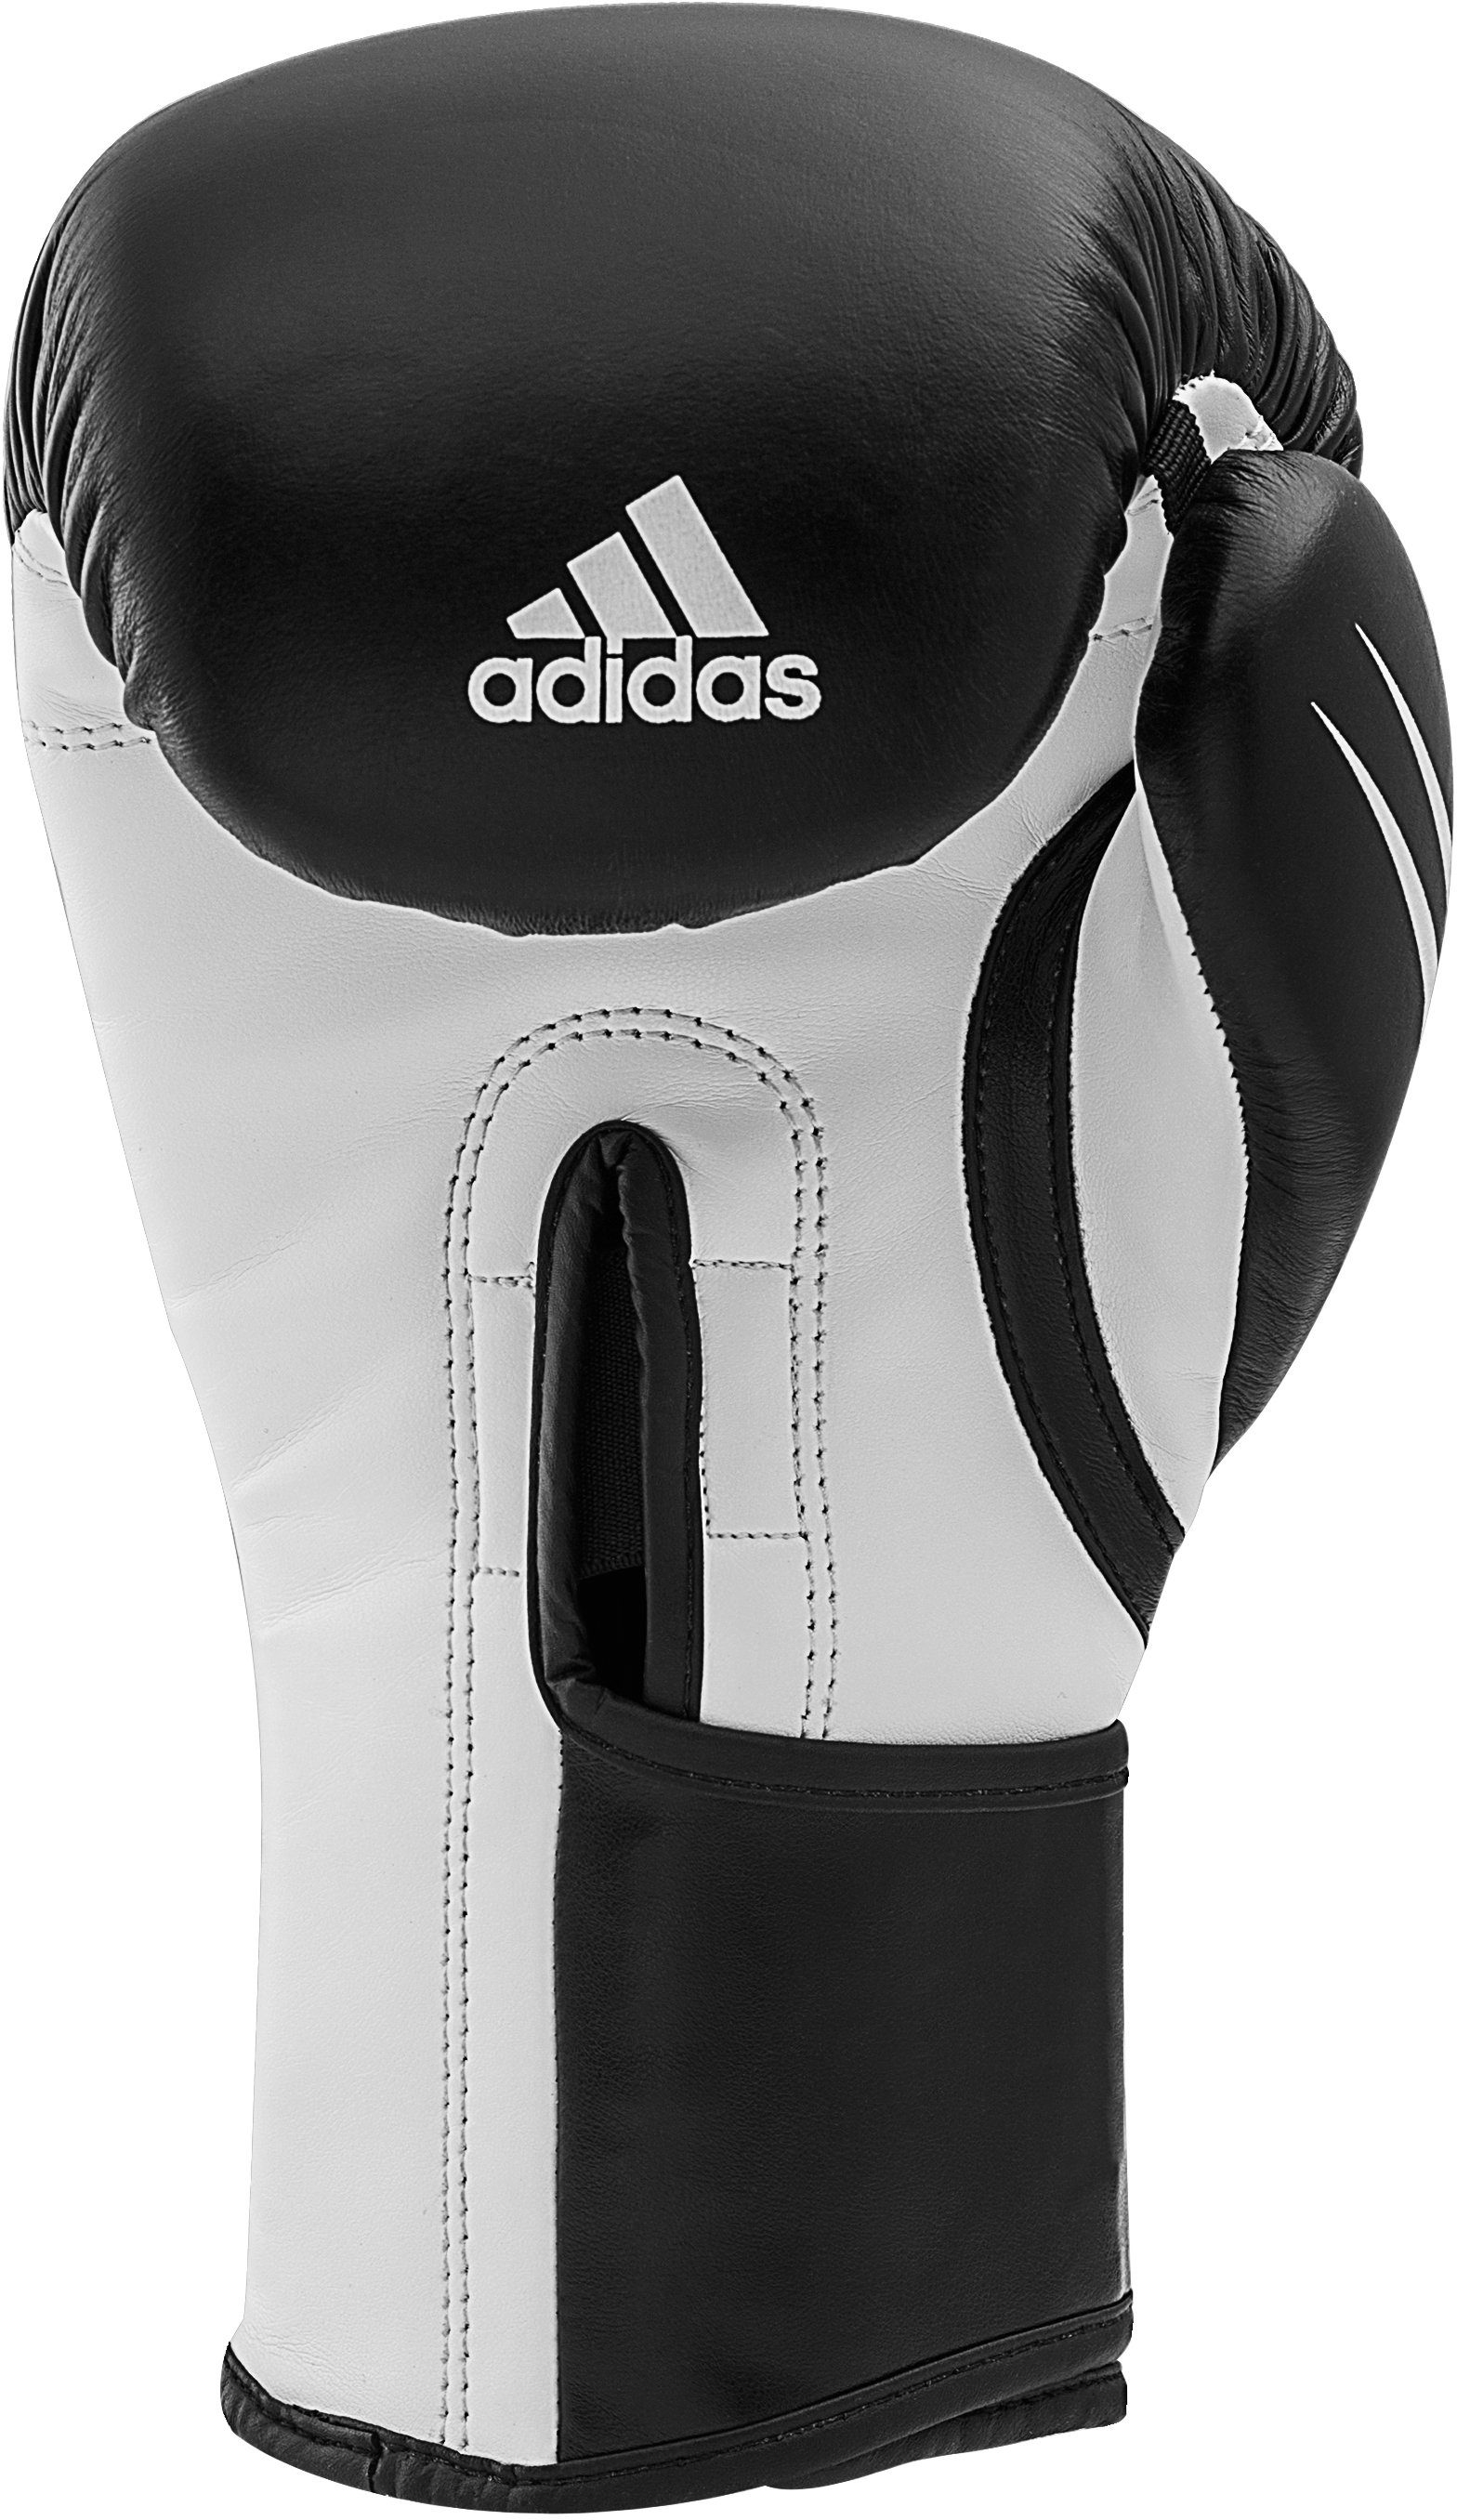 adidas Performance schwarz/weiß Boxhandschuhe